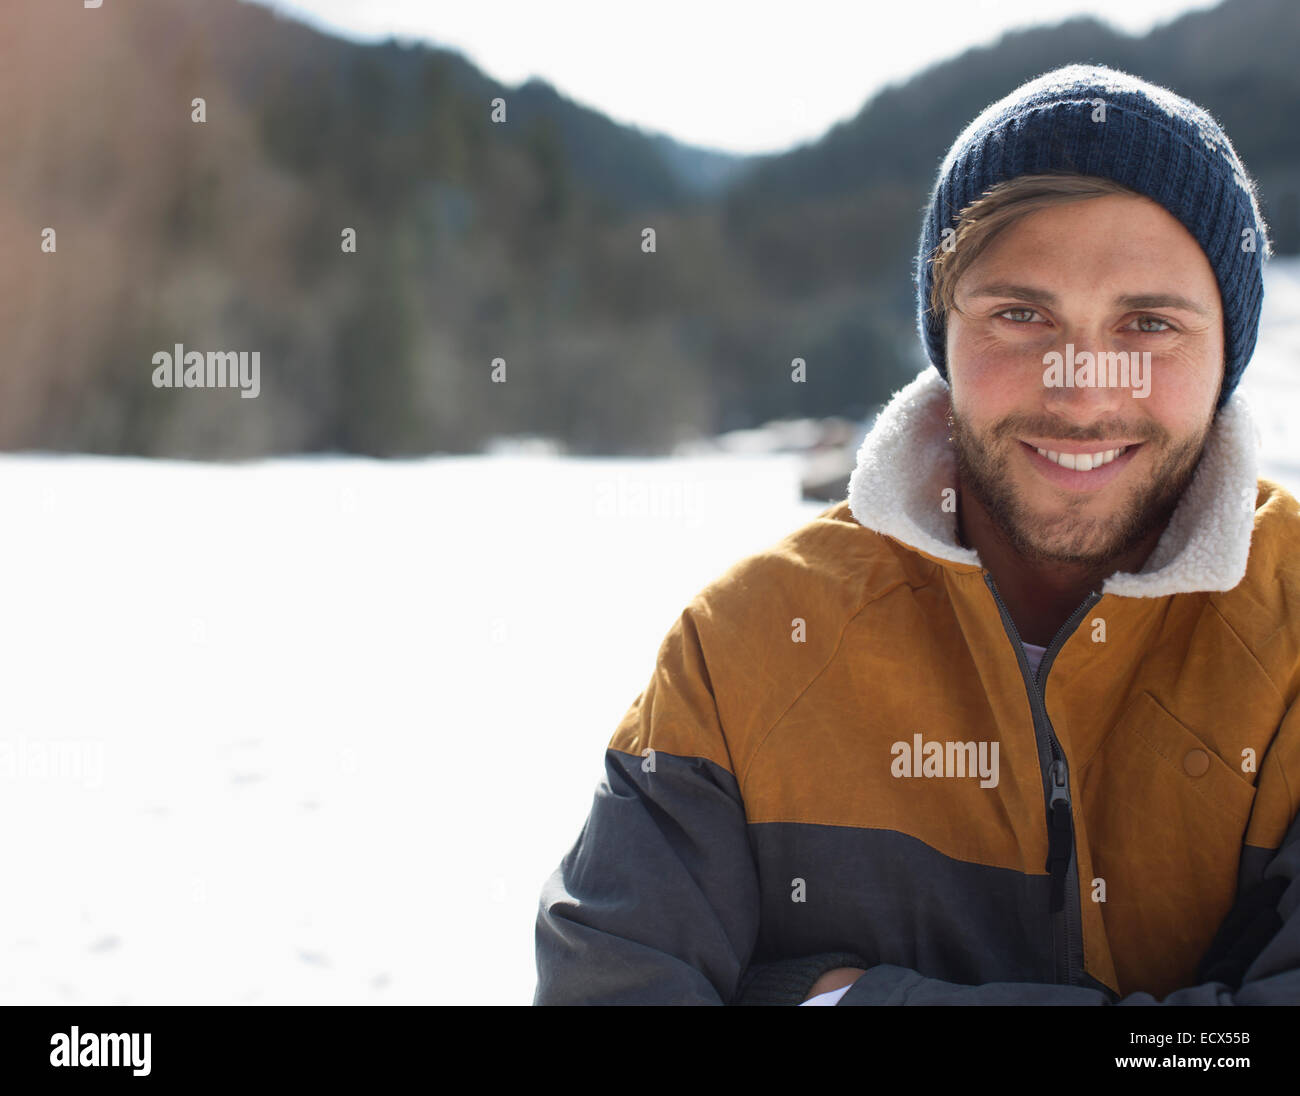 Portrait of smiling man in snow Banque D'Images